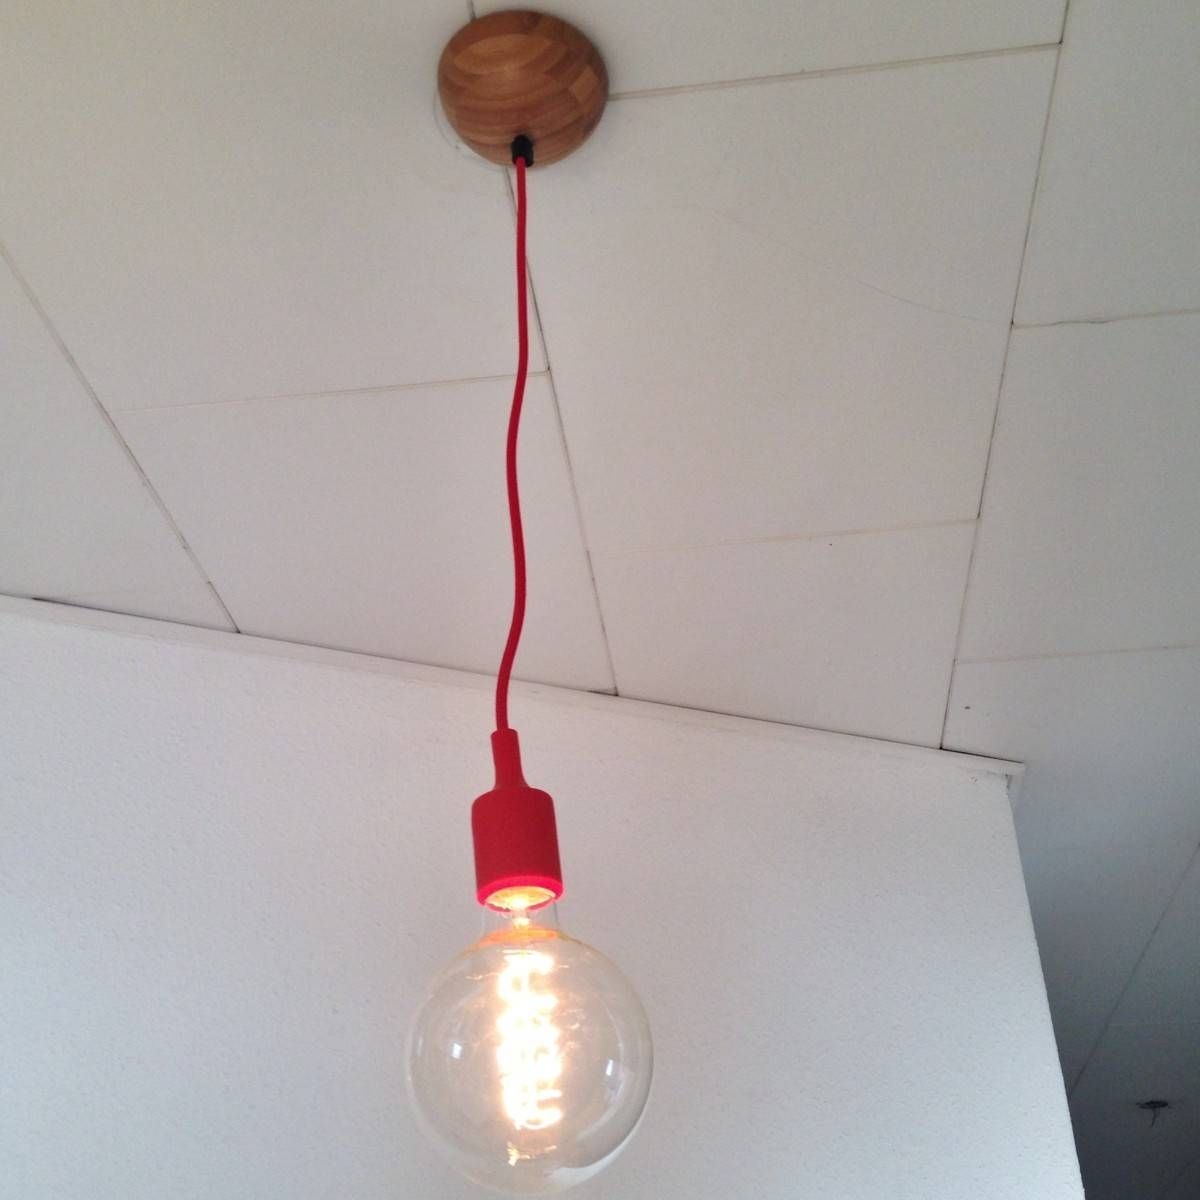 Blanda Matt Serving Bowl To Ceiling Light Canopy Hack – Ikea In Ikea Pendant Light Kits (View 13 of 15)